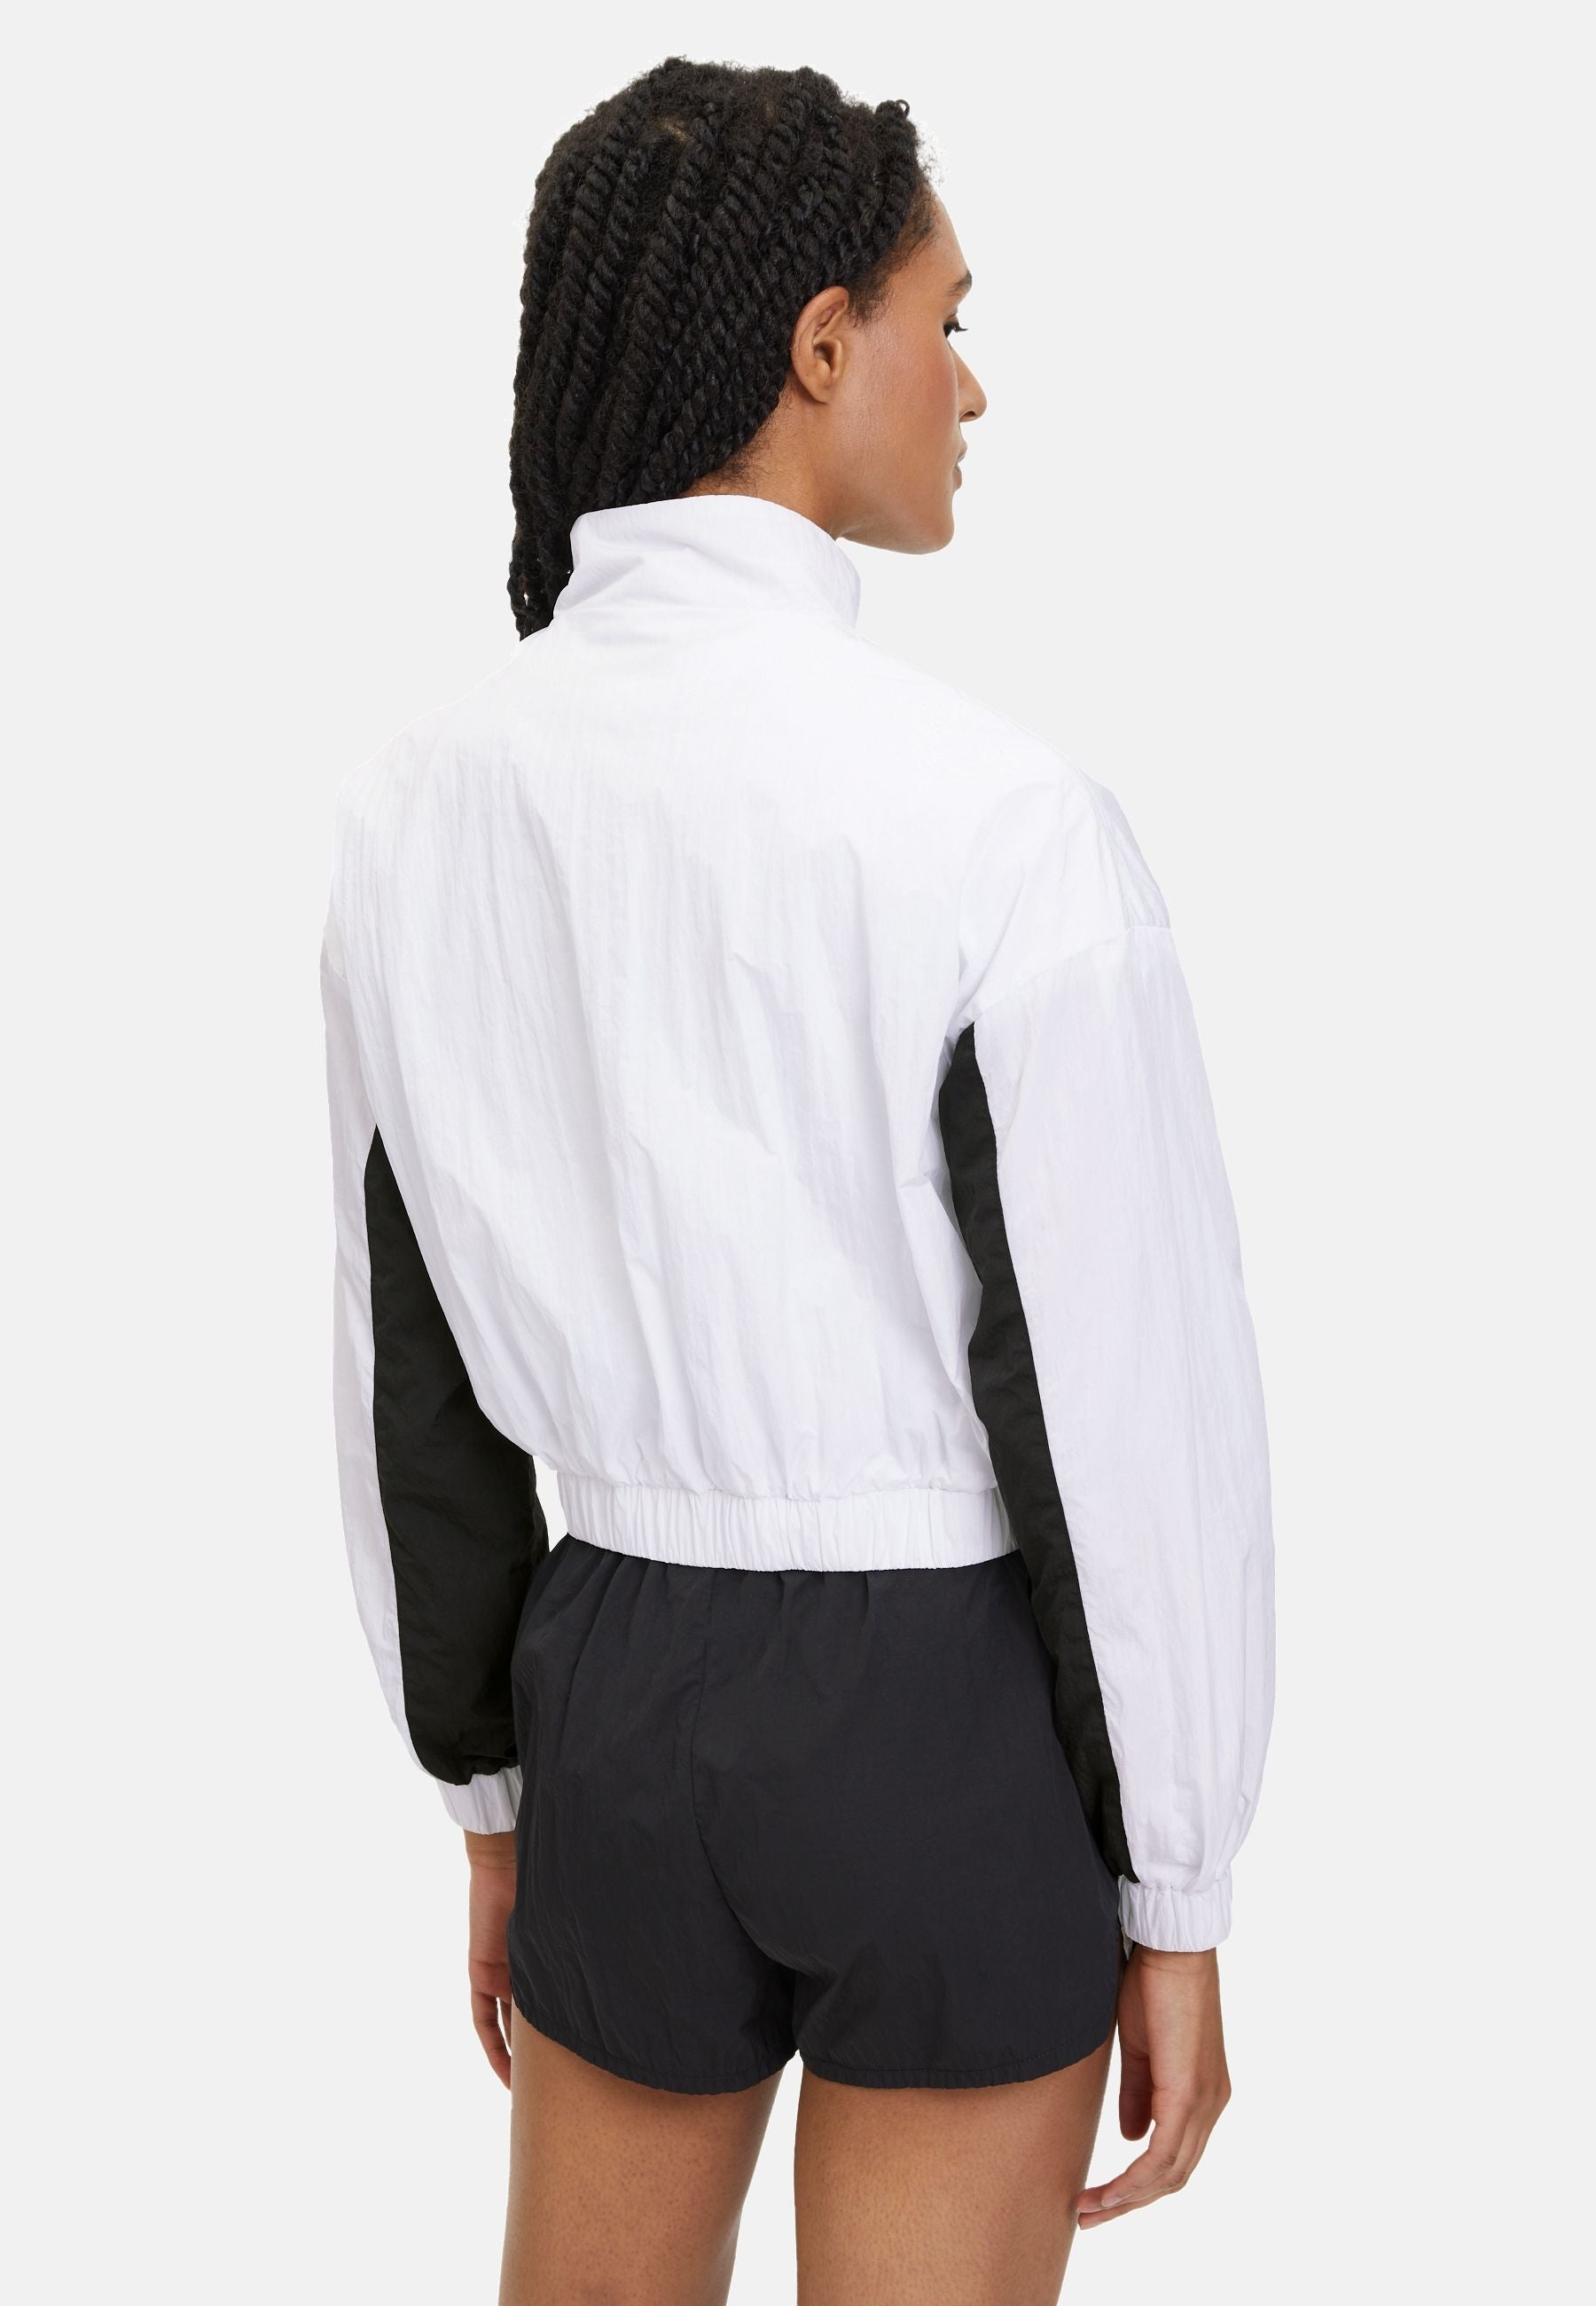 Lubu Cropped Track Jacket in Bright White Black Jacken Fila   